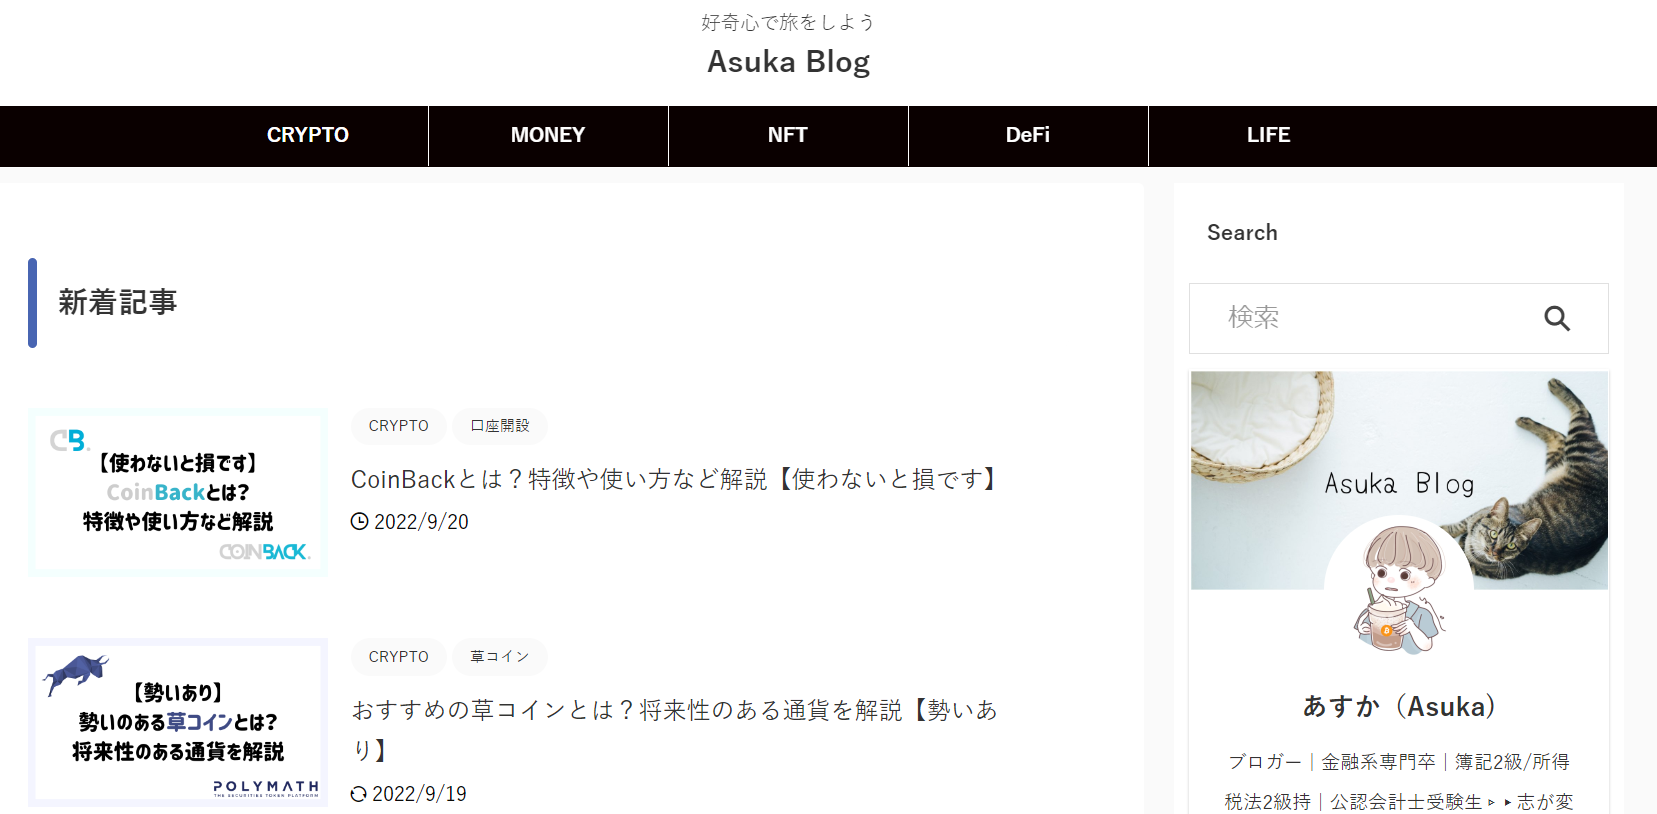 Asuka Blog